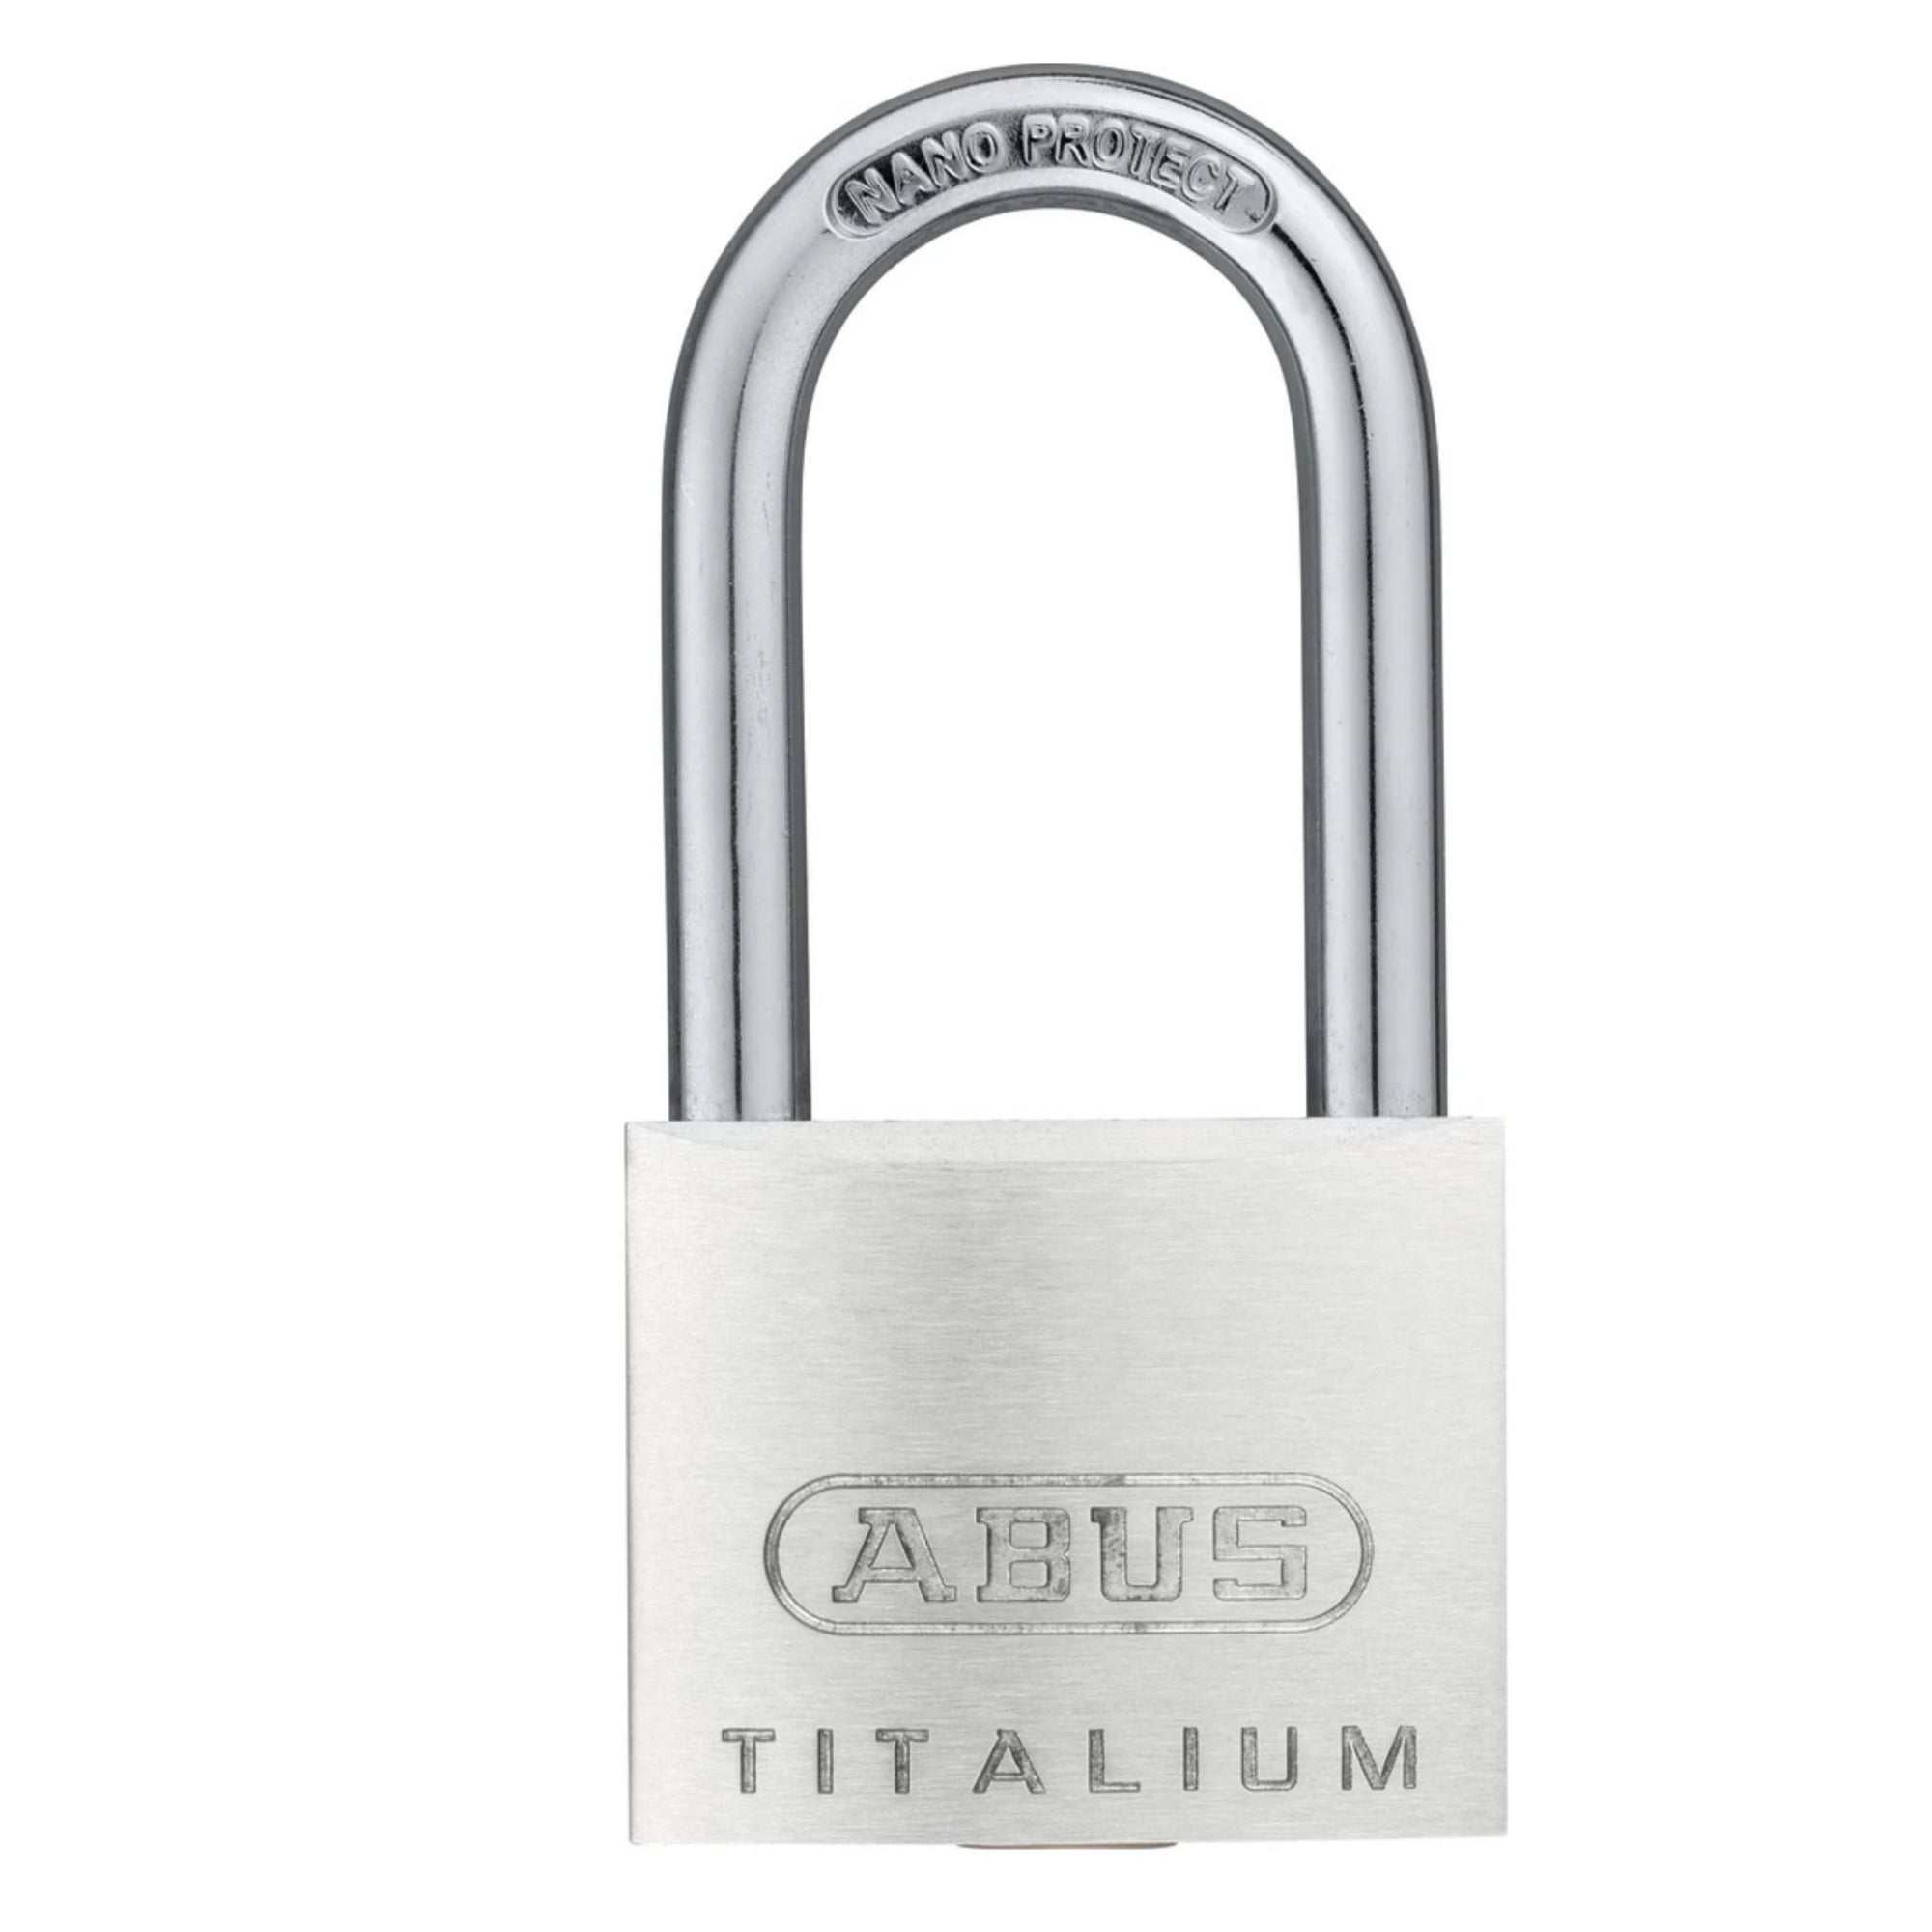 Abus 64TI/40HB40 KA 6411 Titalium Padlocks with 1-1/2" Shackle Keyed Alike to Match Key Number KA6411 - The Lock Source